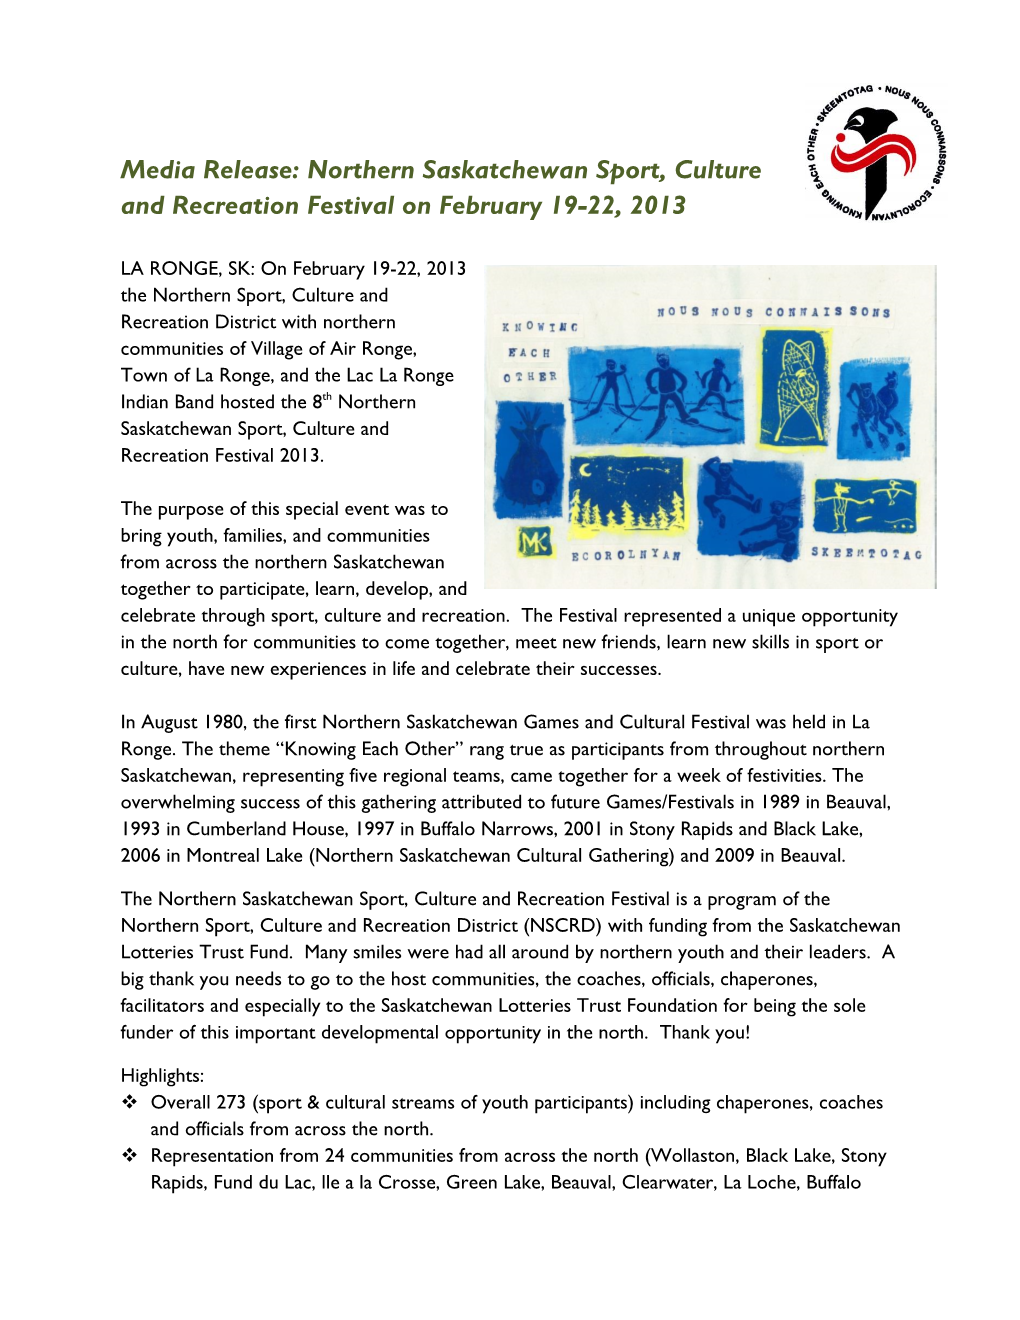 Media Release: Northern Saskatchewan Sport, Culture and Recreation Festival on February 19-22, 2013